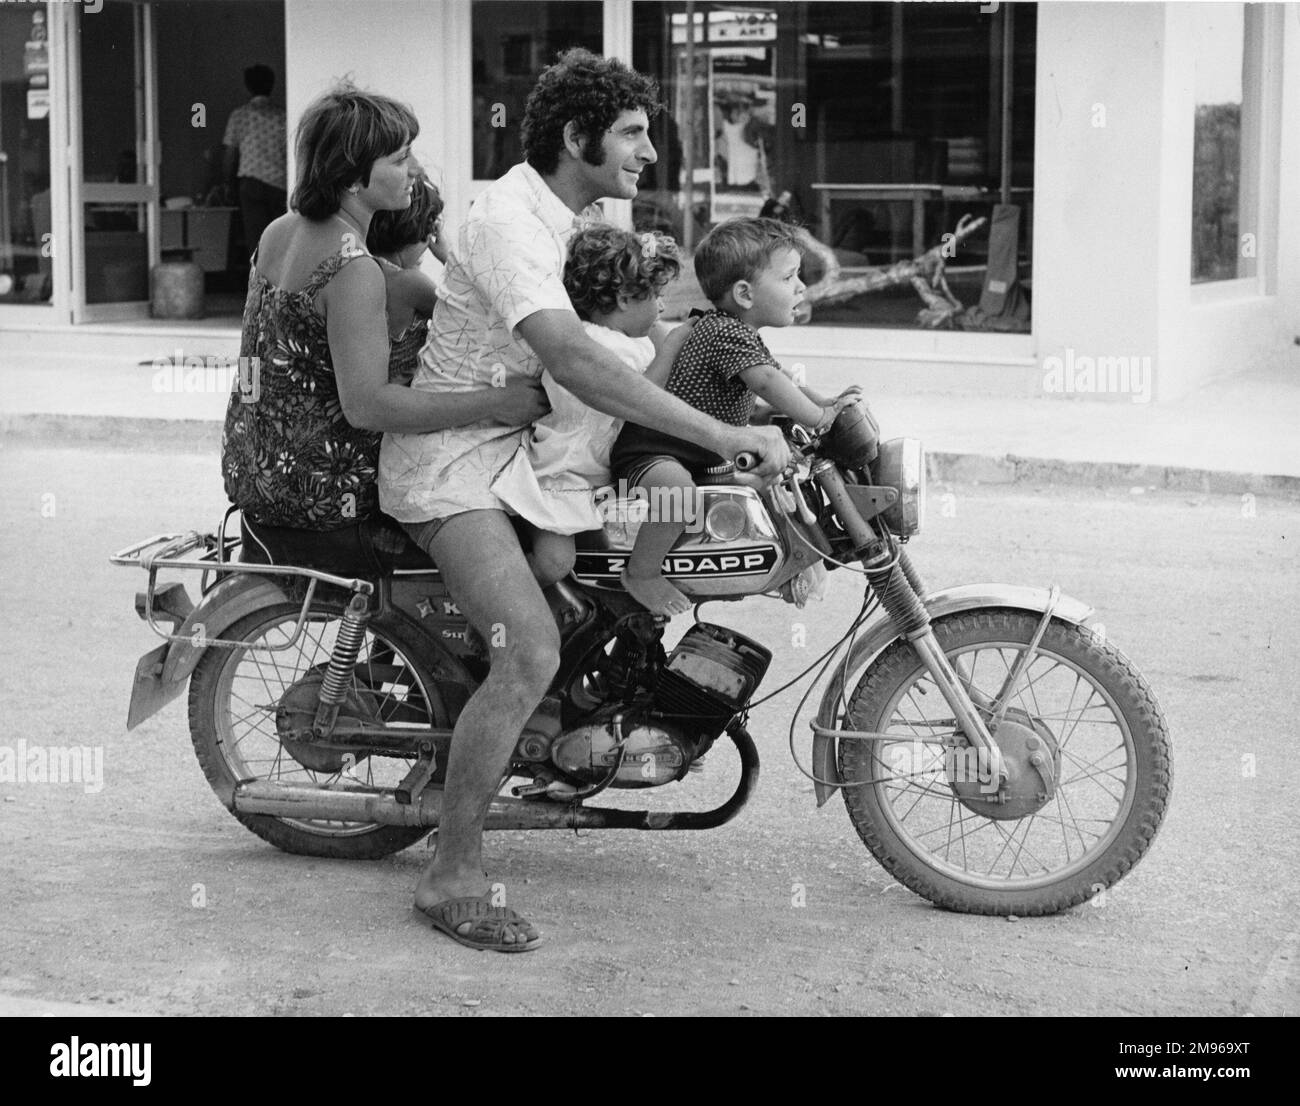 https://c8.alamy.com/comp/2M969XT/a-family-of-five-on-a-zundapp-motorcycle-in-rhodes-greece-2M969XT.jpg